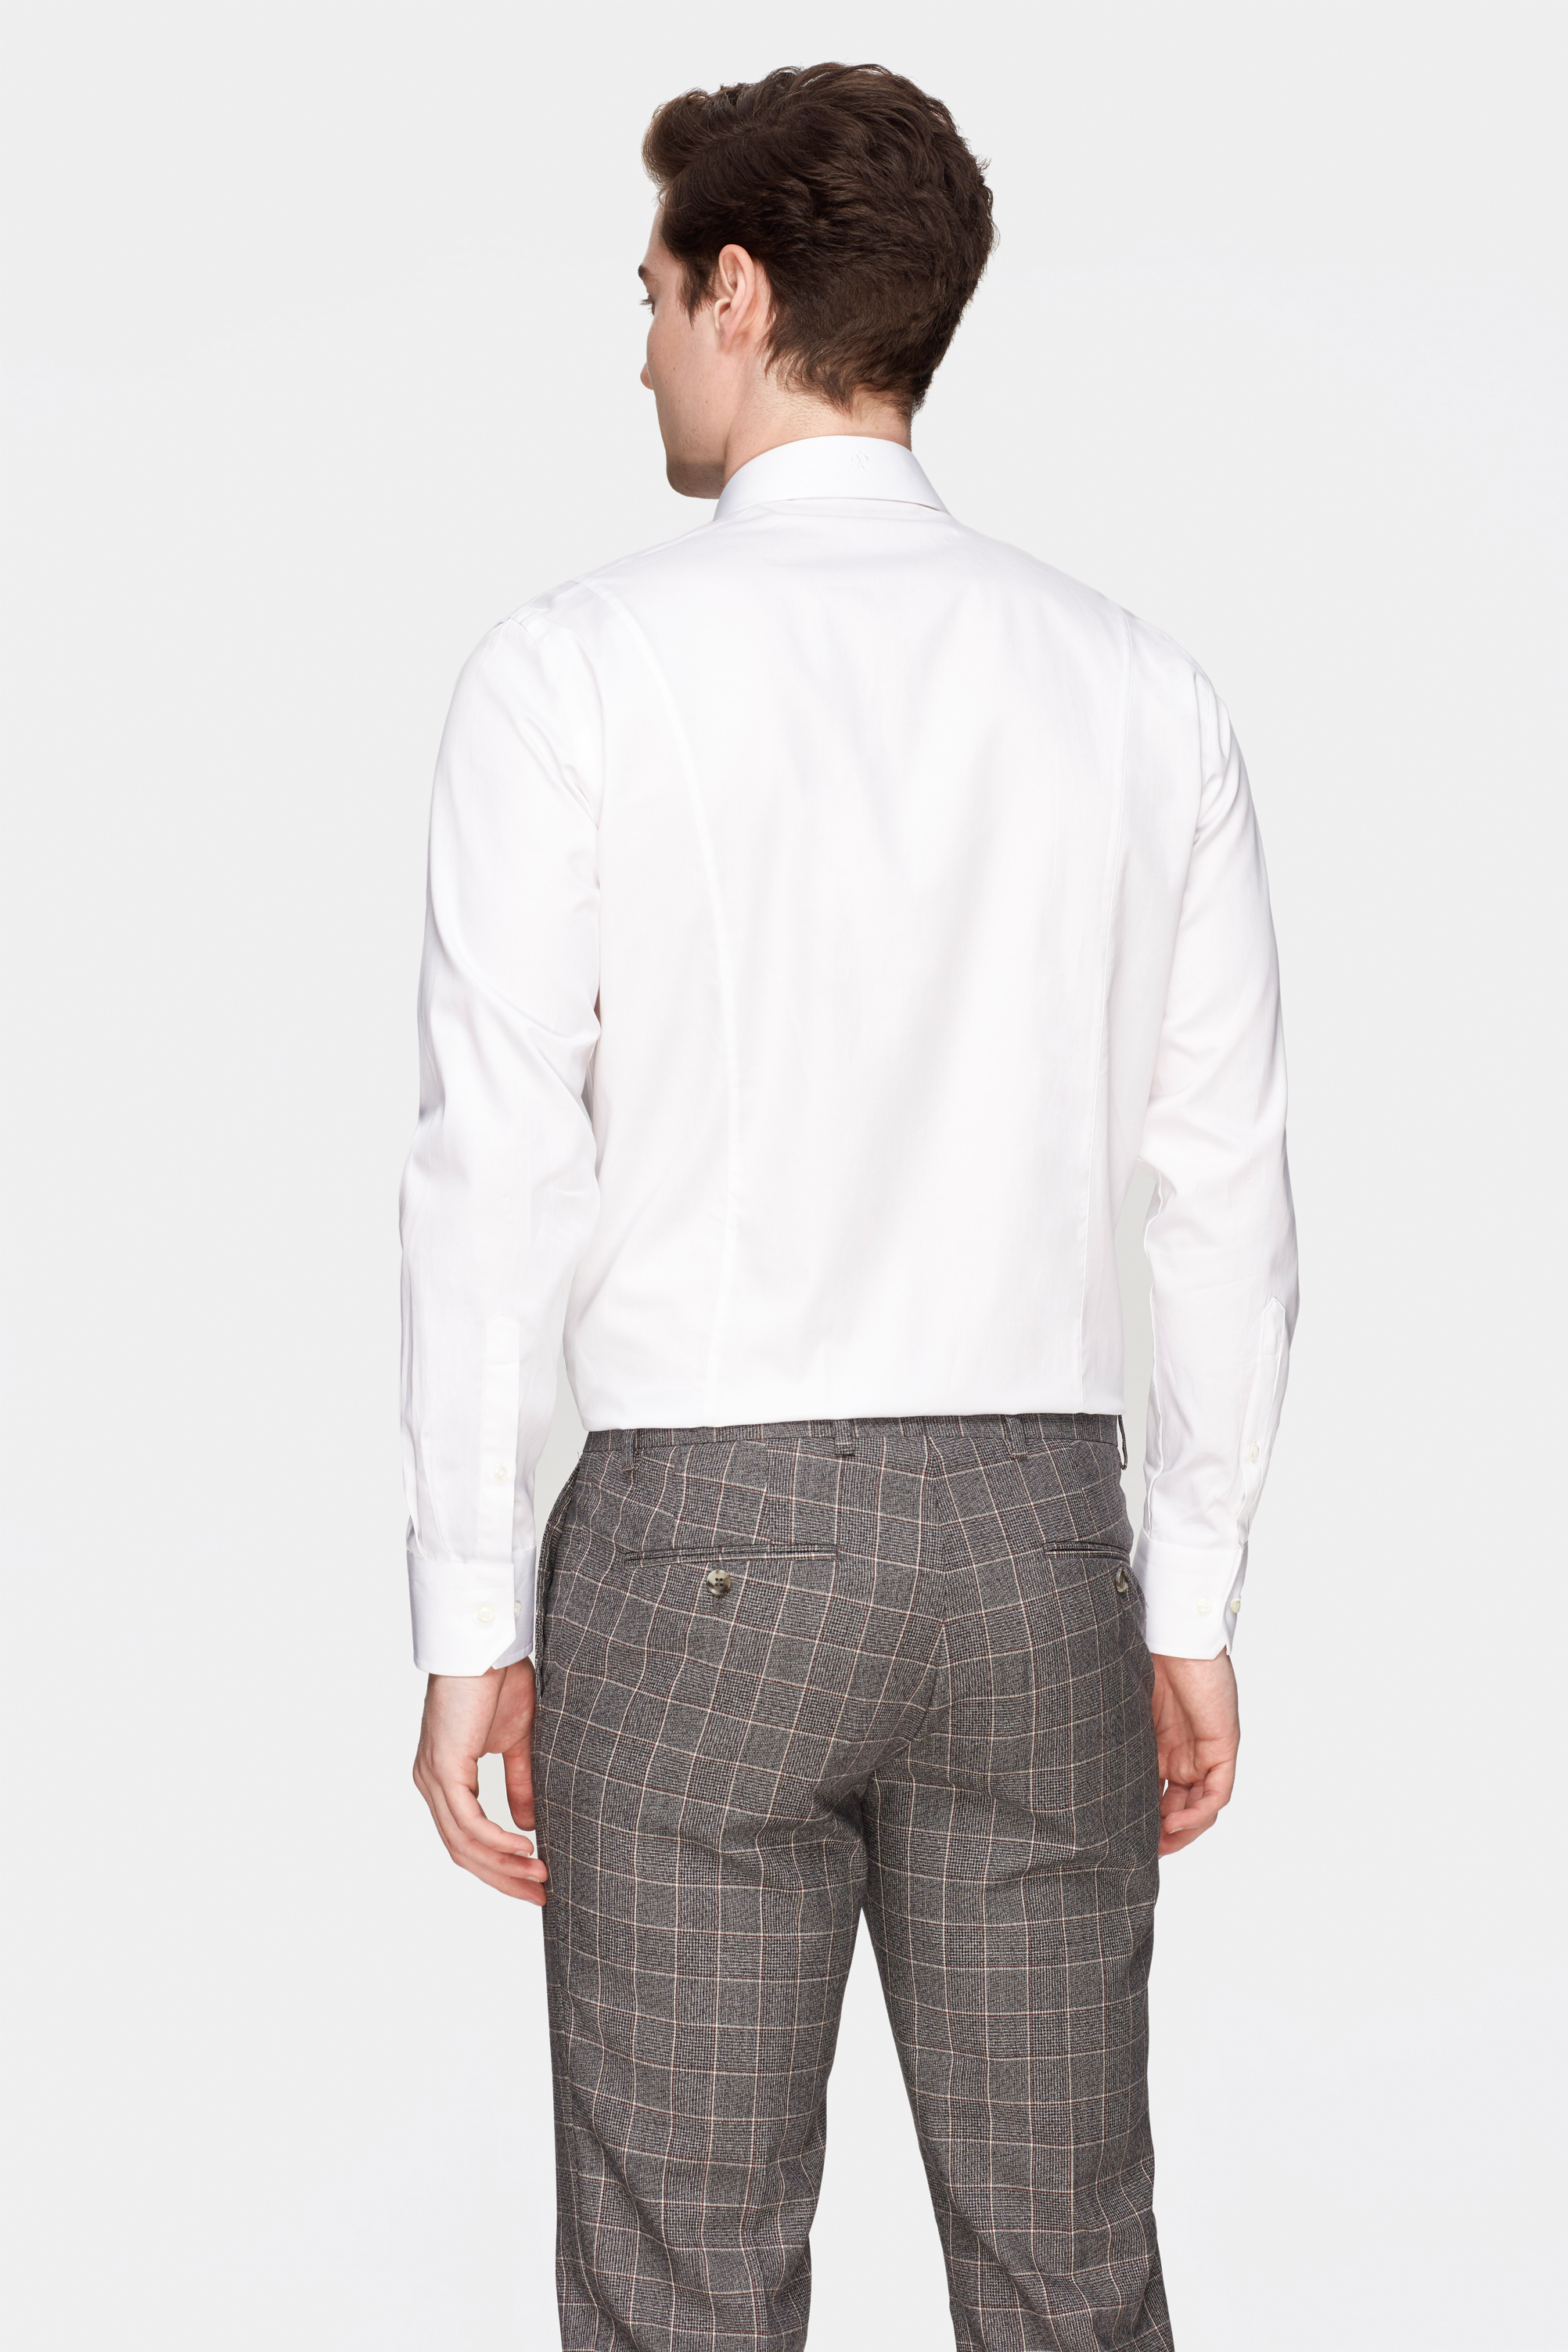 Damat Tween Damat Slim Fit Beyaz %100 Pamuk Gömlek. 3